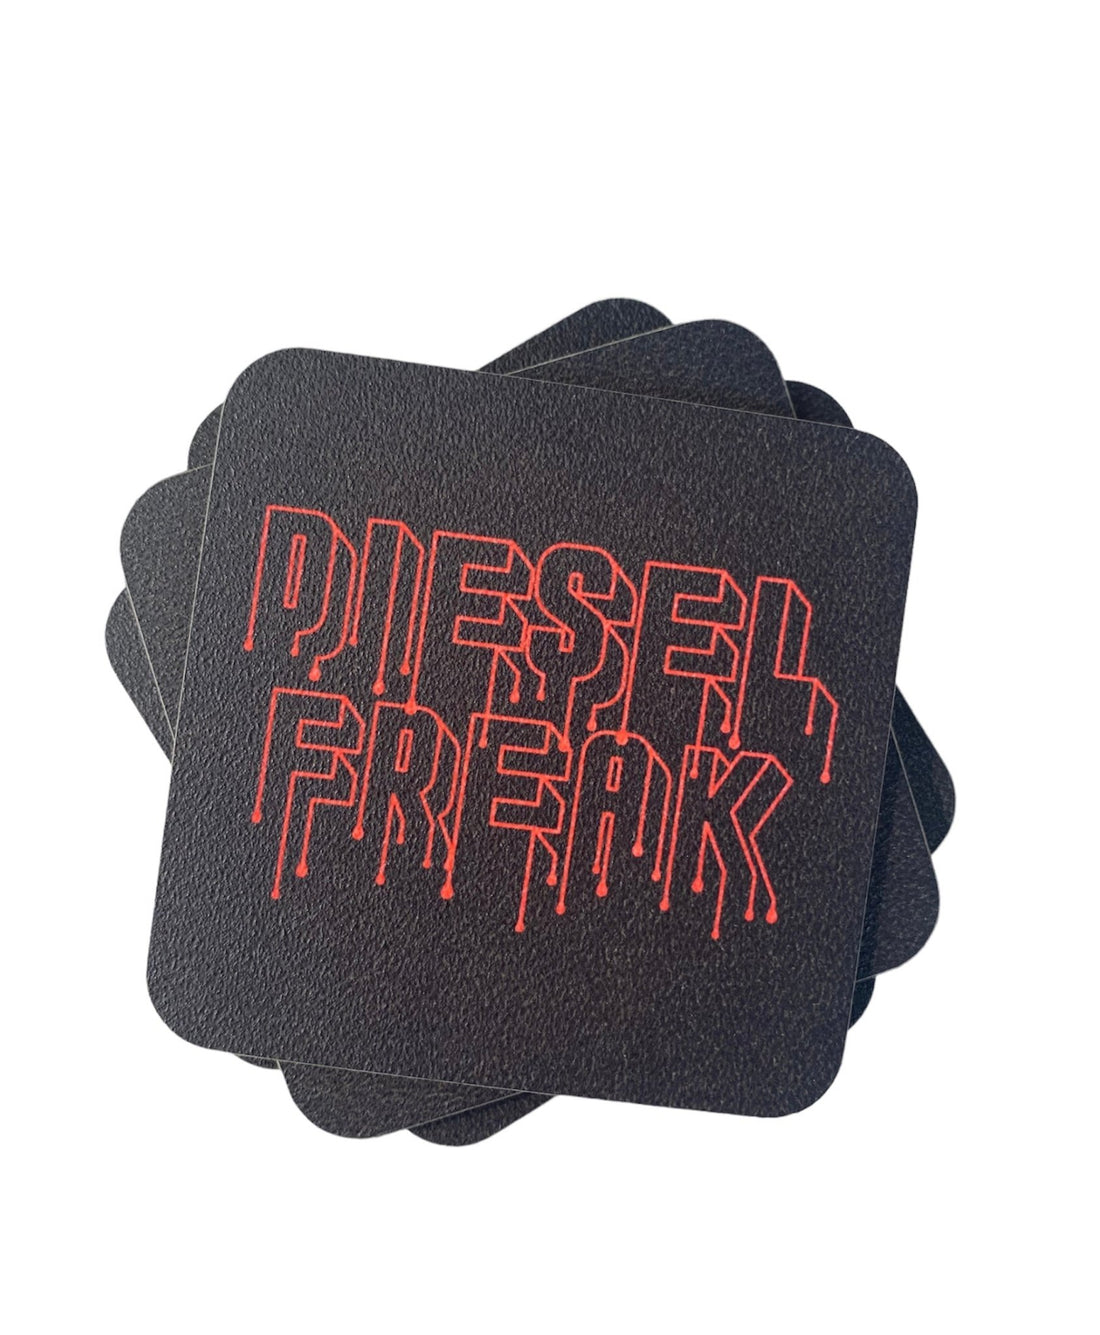 Dripping Diesel Textured Coaster - Diesel Freak